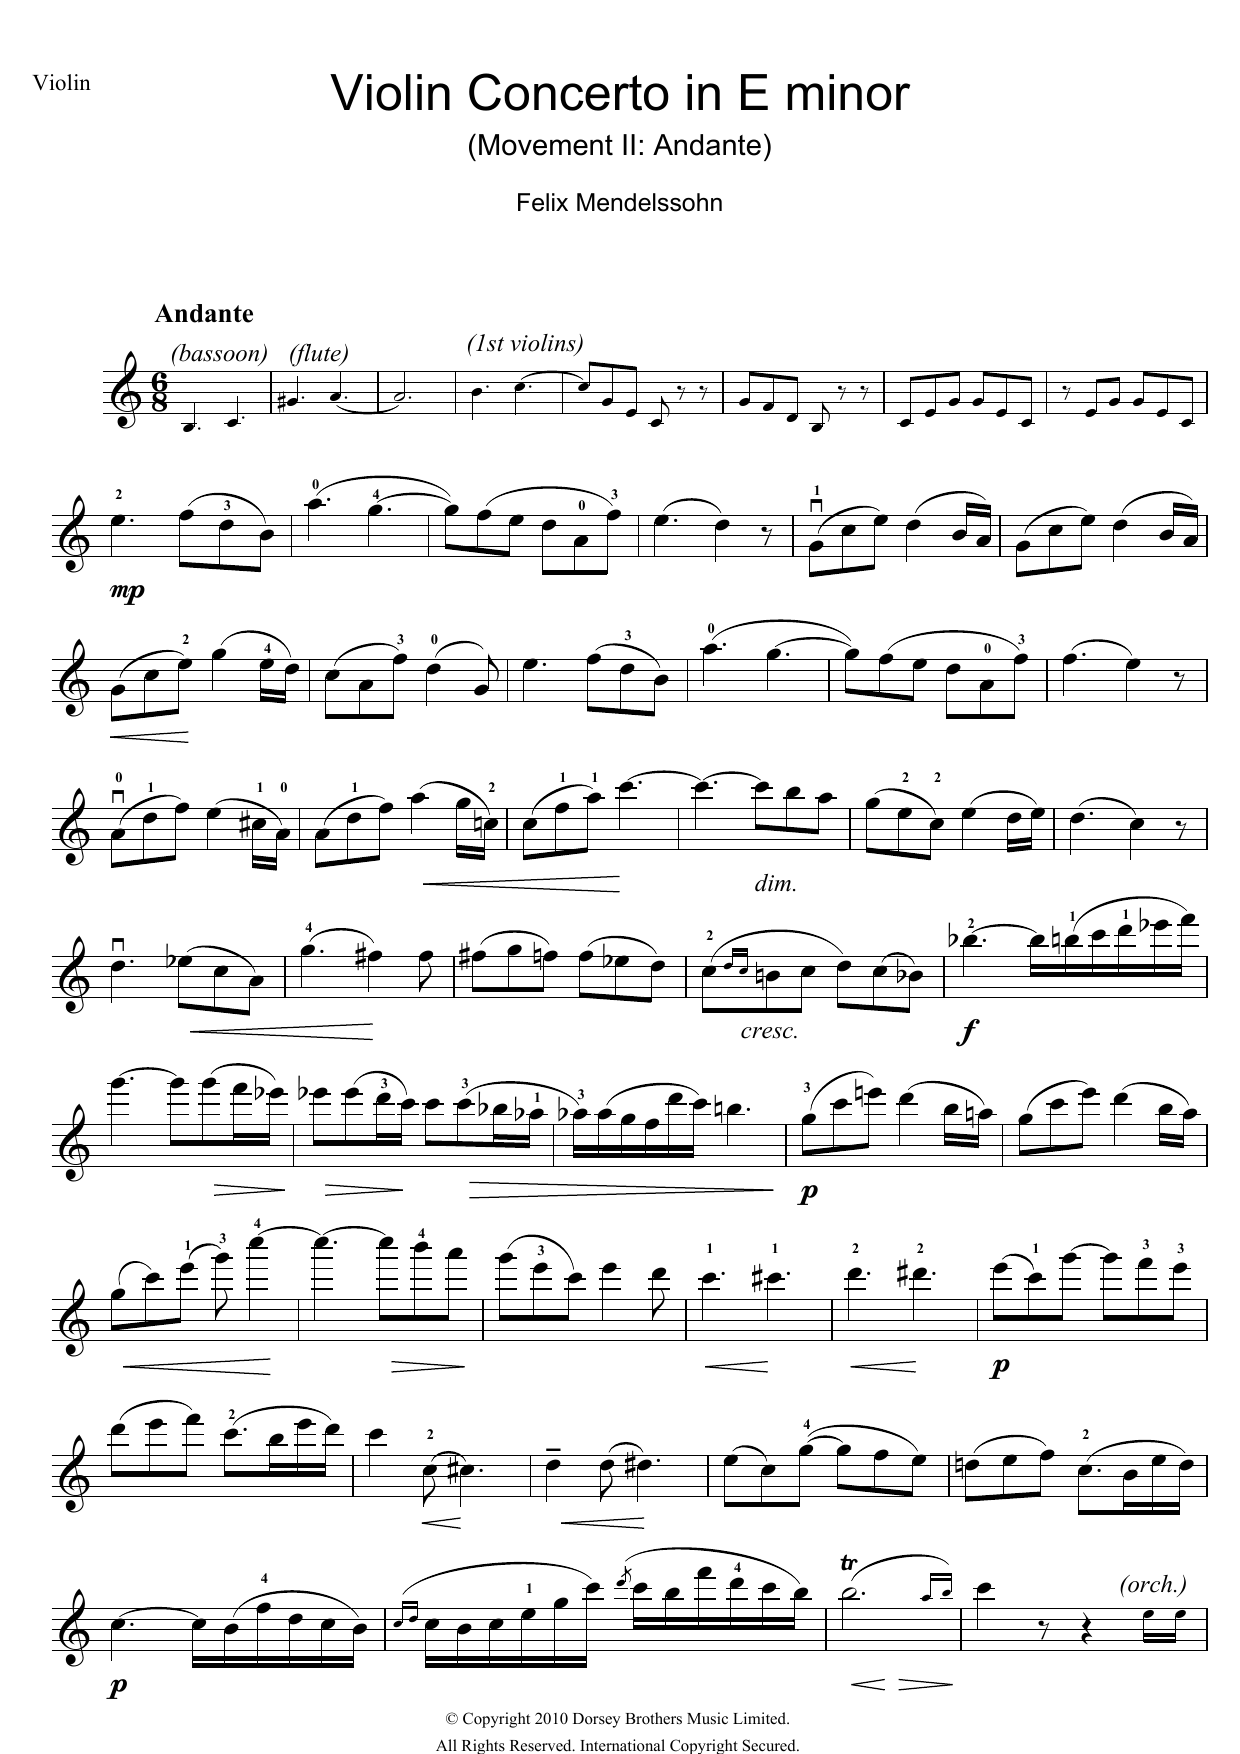 Felix Mendelssohn Violin Concerto In E Minor, 2nd Movement: Andante Sheet Music Notes & Chords for Violin - Download or Print PDF